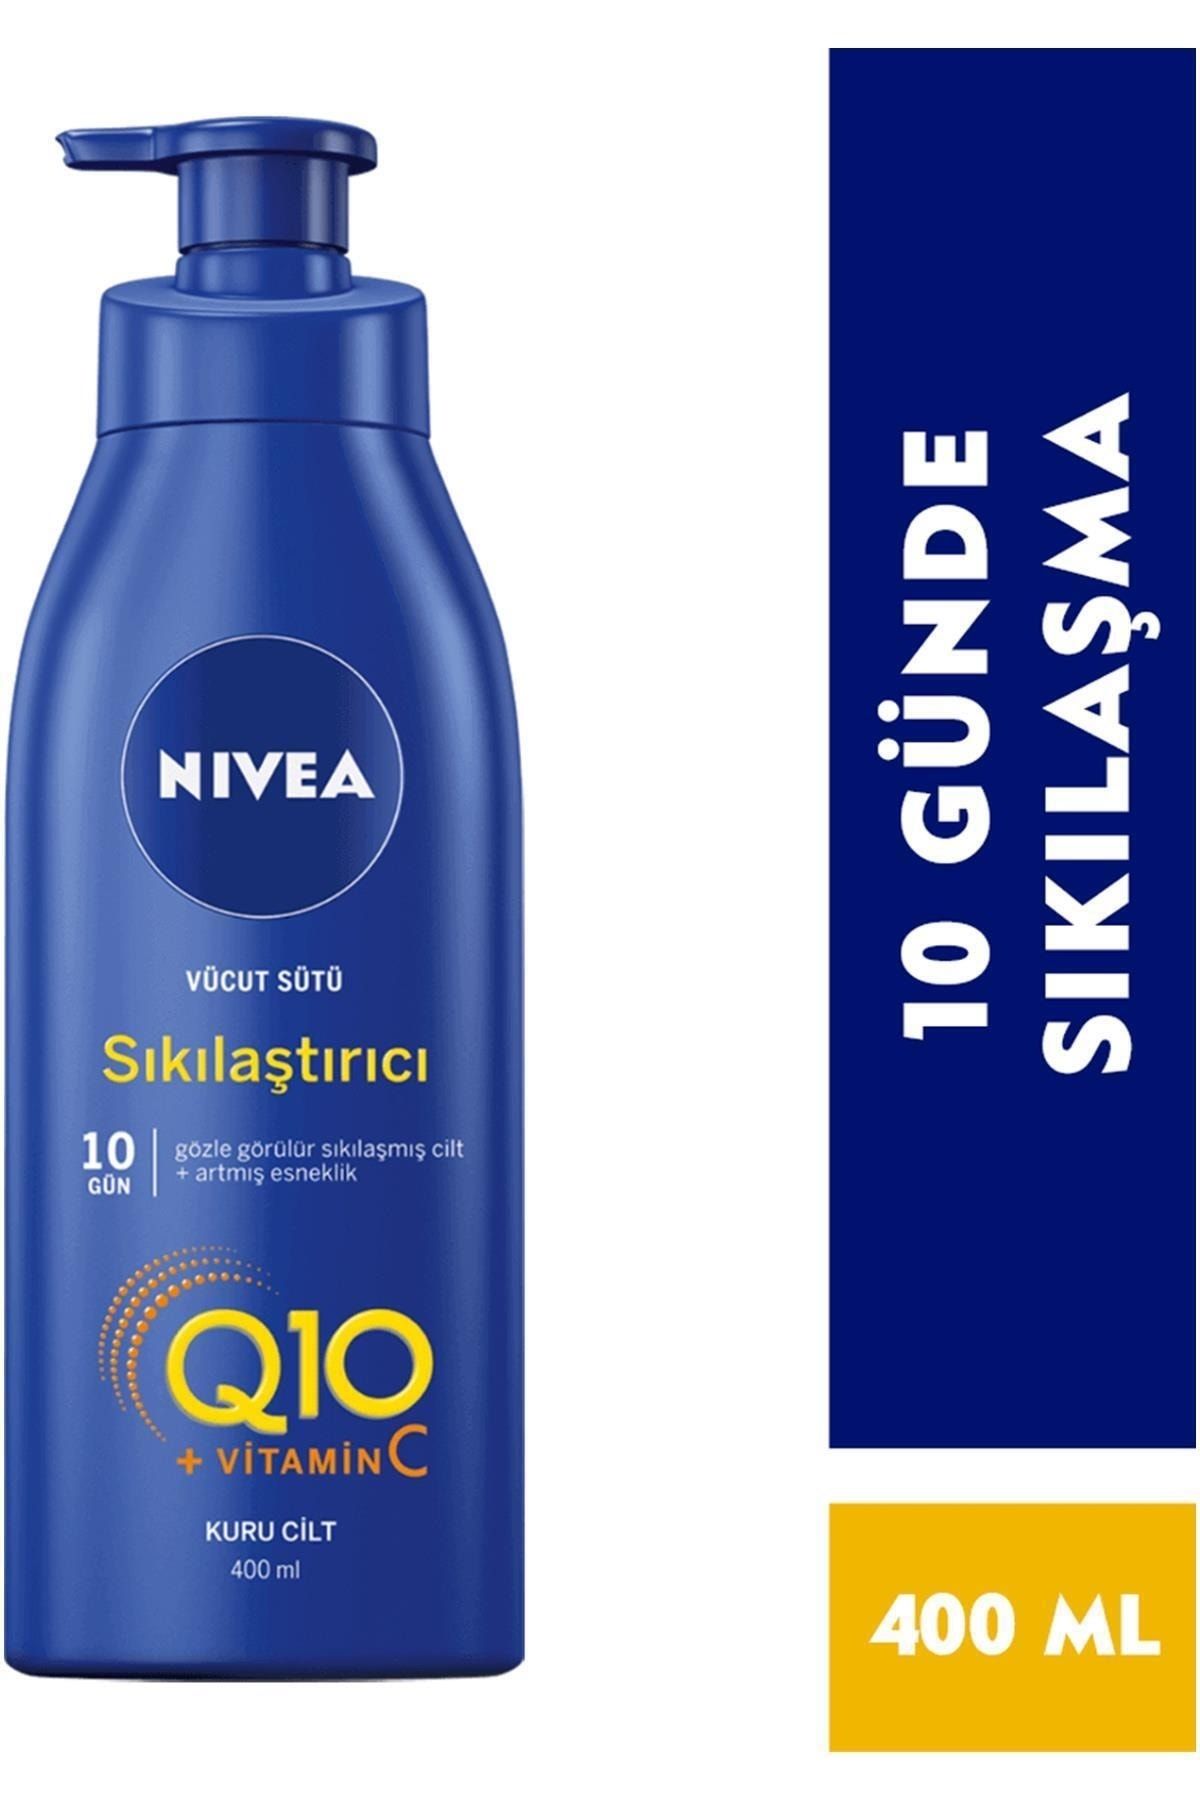 NIVEA Q10 Vücut Sütü Sıkılaştırıcı 400 ml PLNTYSHP1029169